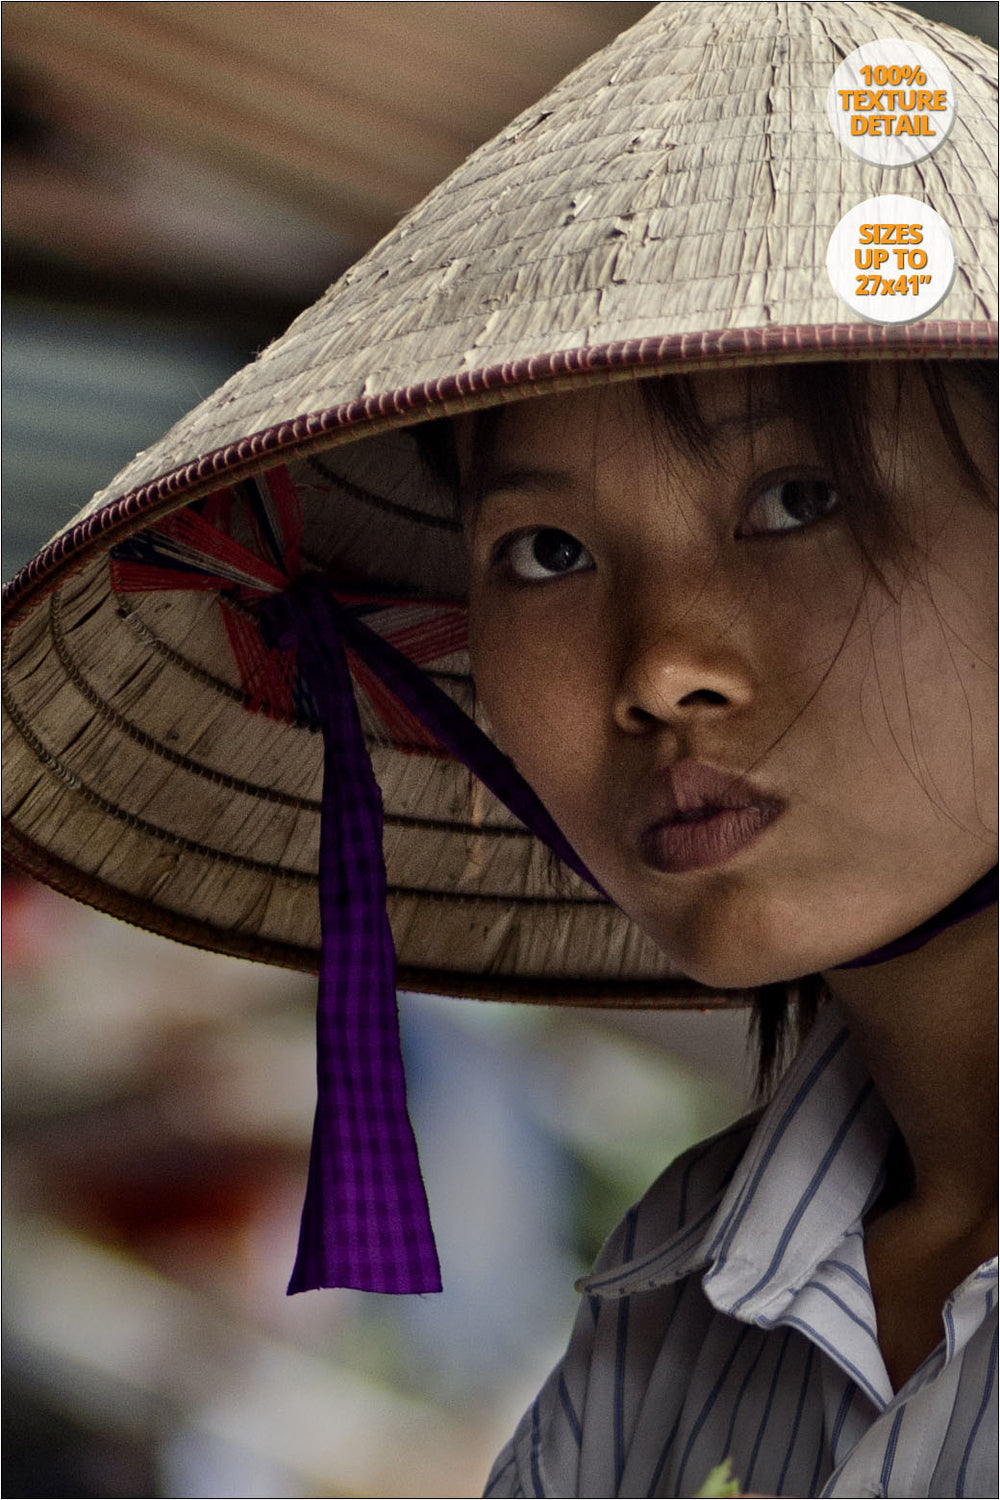 Girl selling pineapples, Hanoi. | 100% magnification Detail.